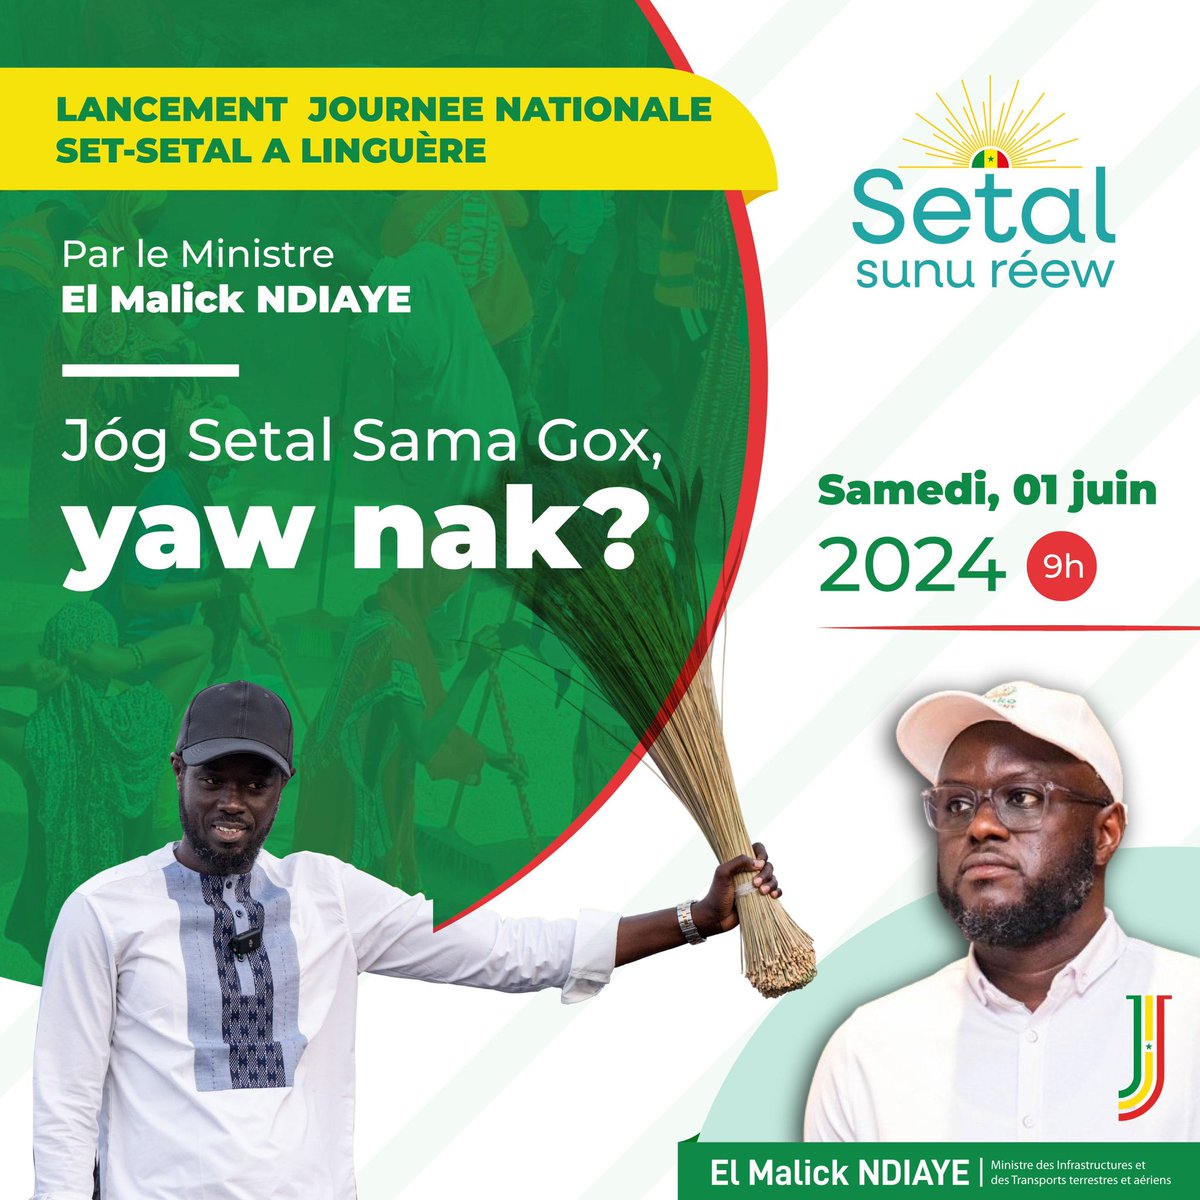 #SetalSunuRew #SetalSamaGox #Senegal #MITTA